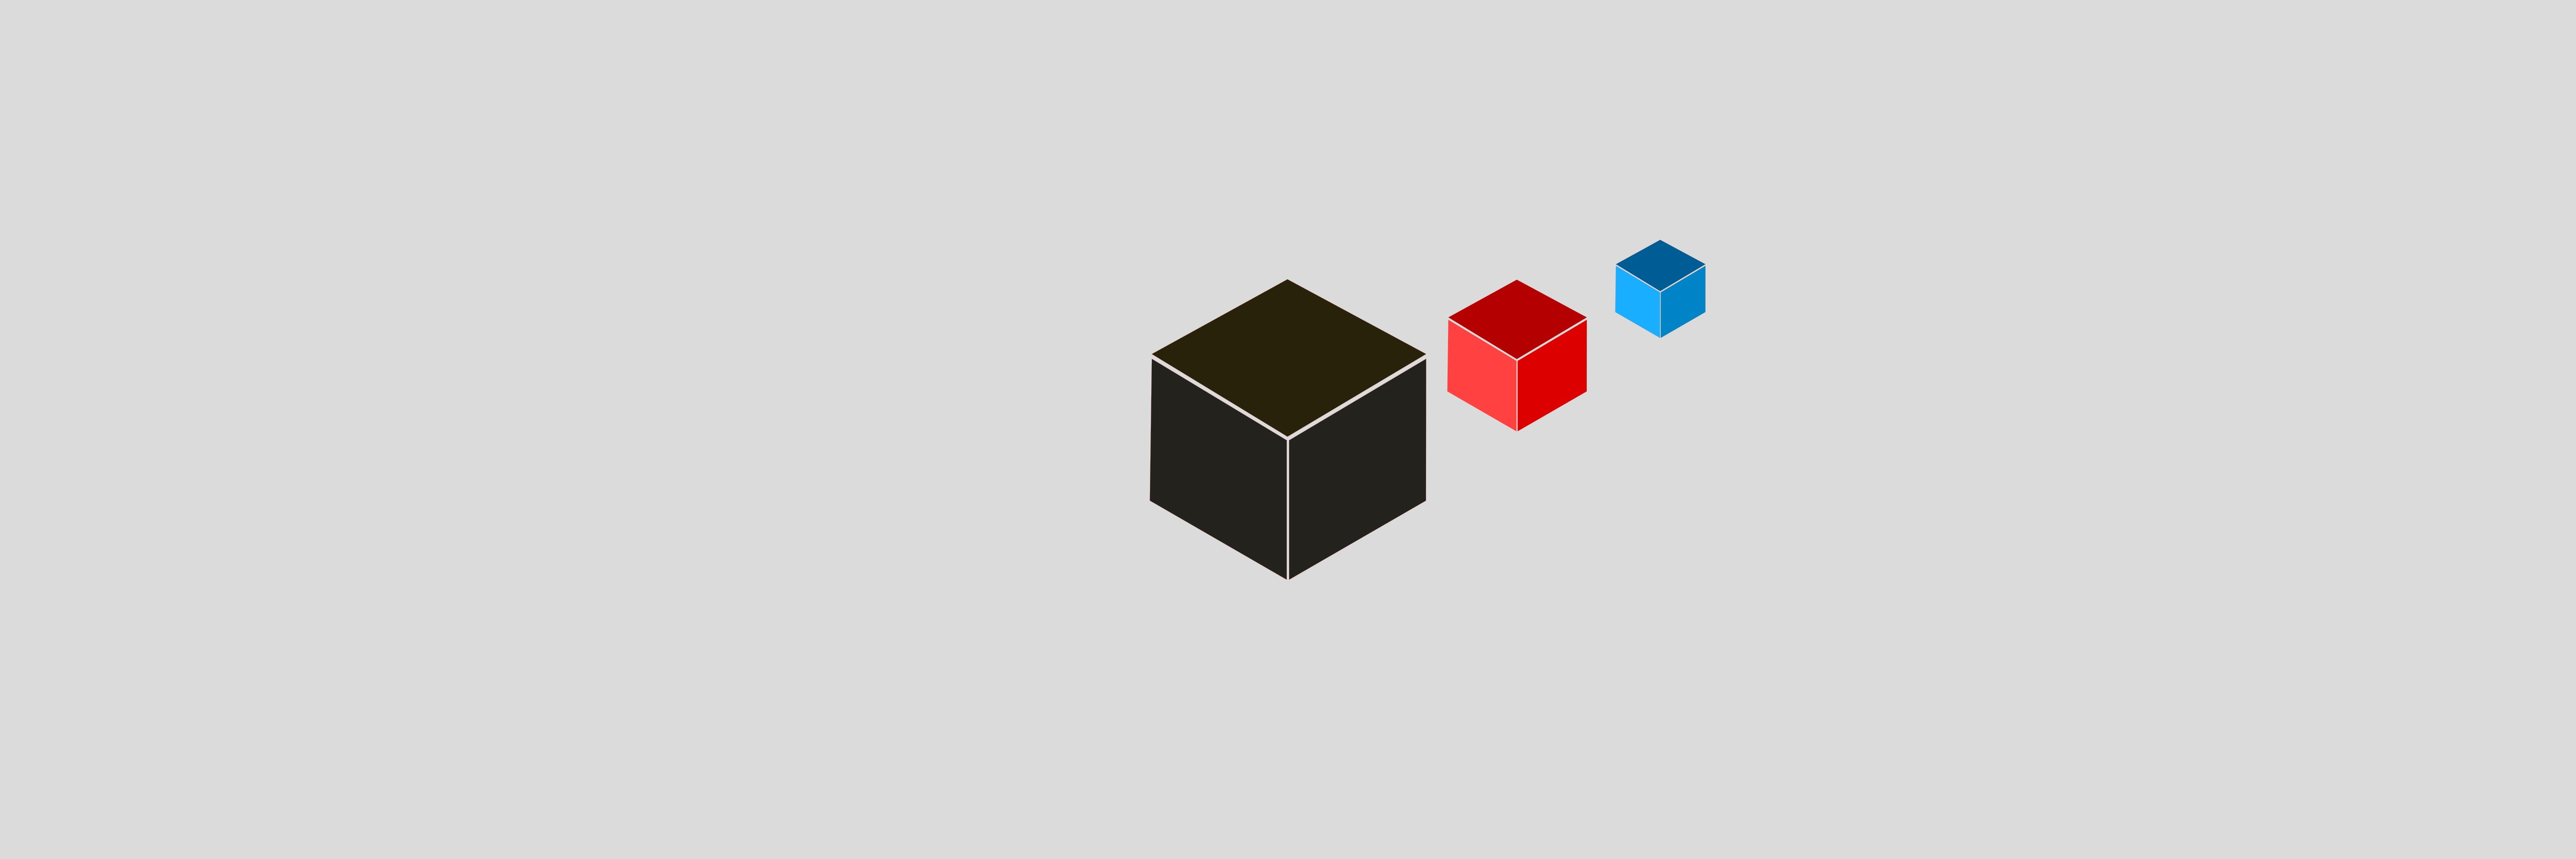 black, cube, gray, minimalism, red